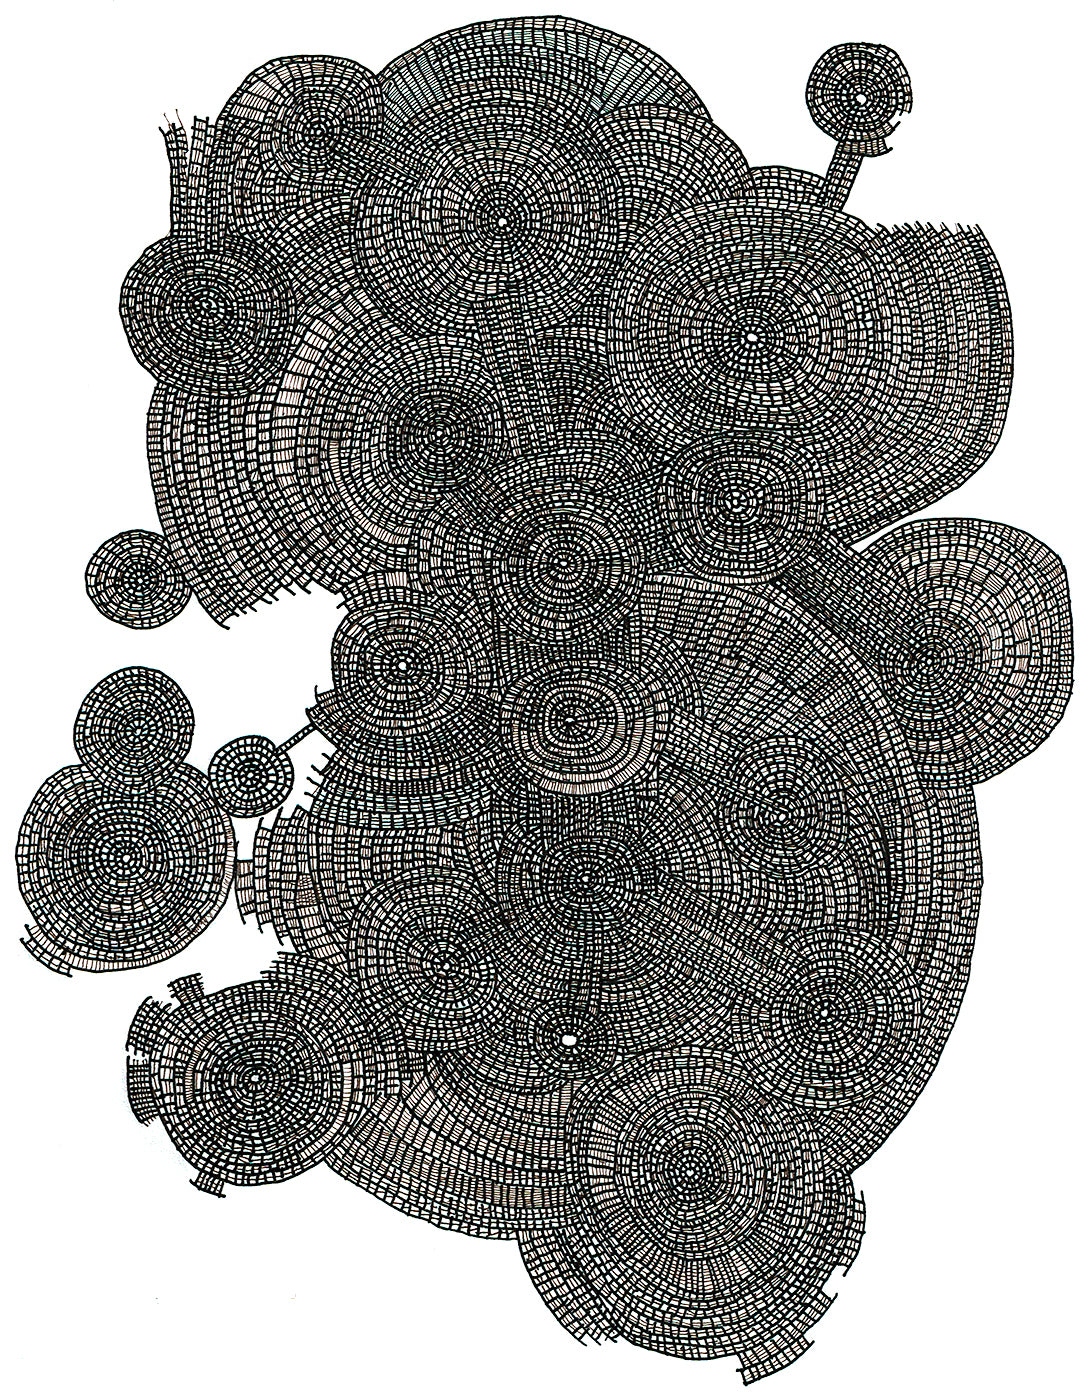 Concentric Grid #4, Giclée Print, Signed